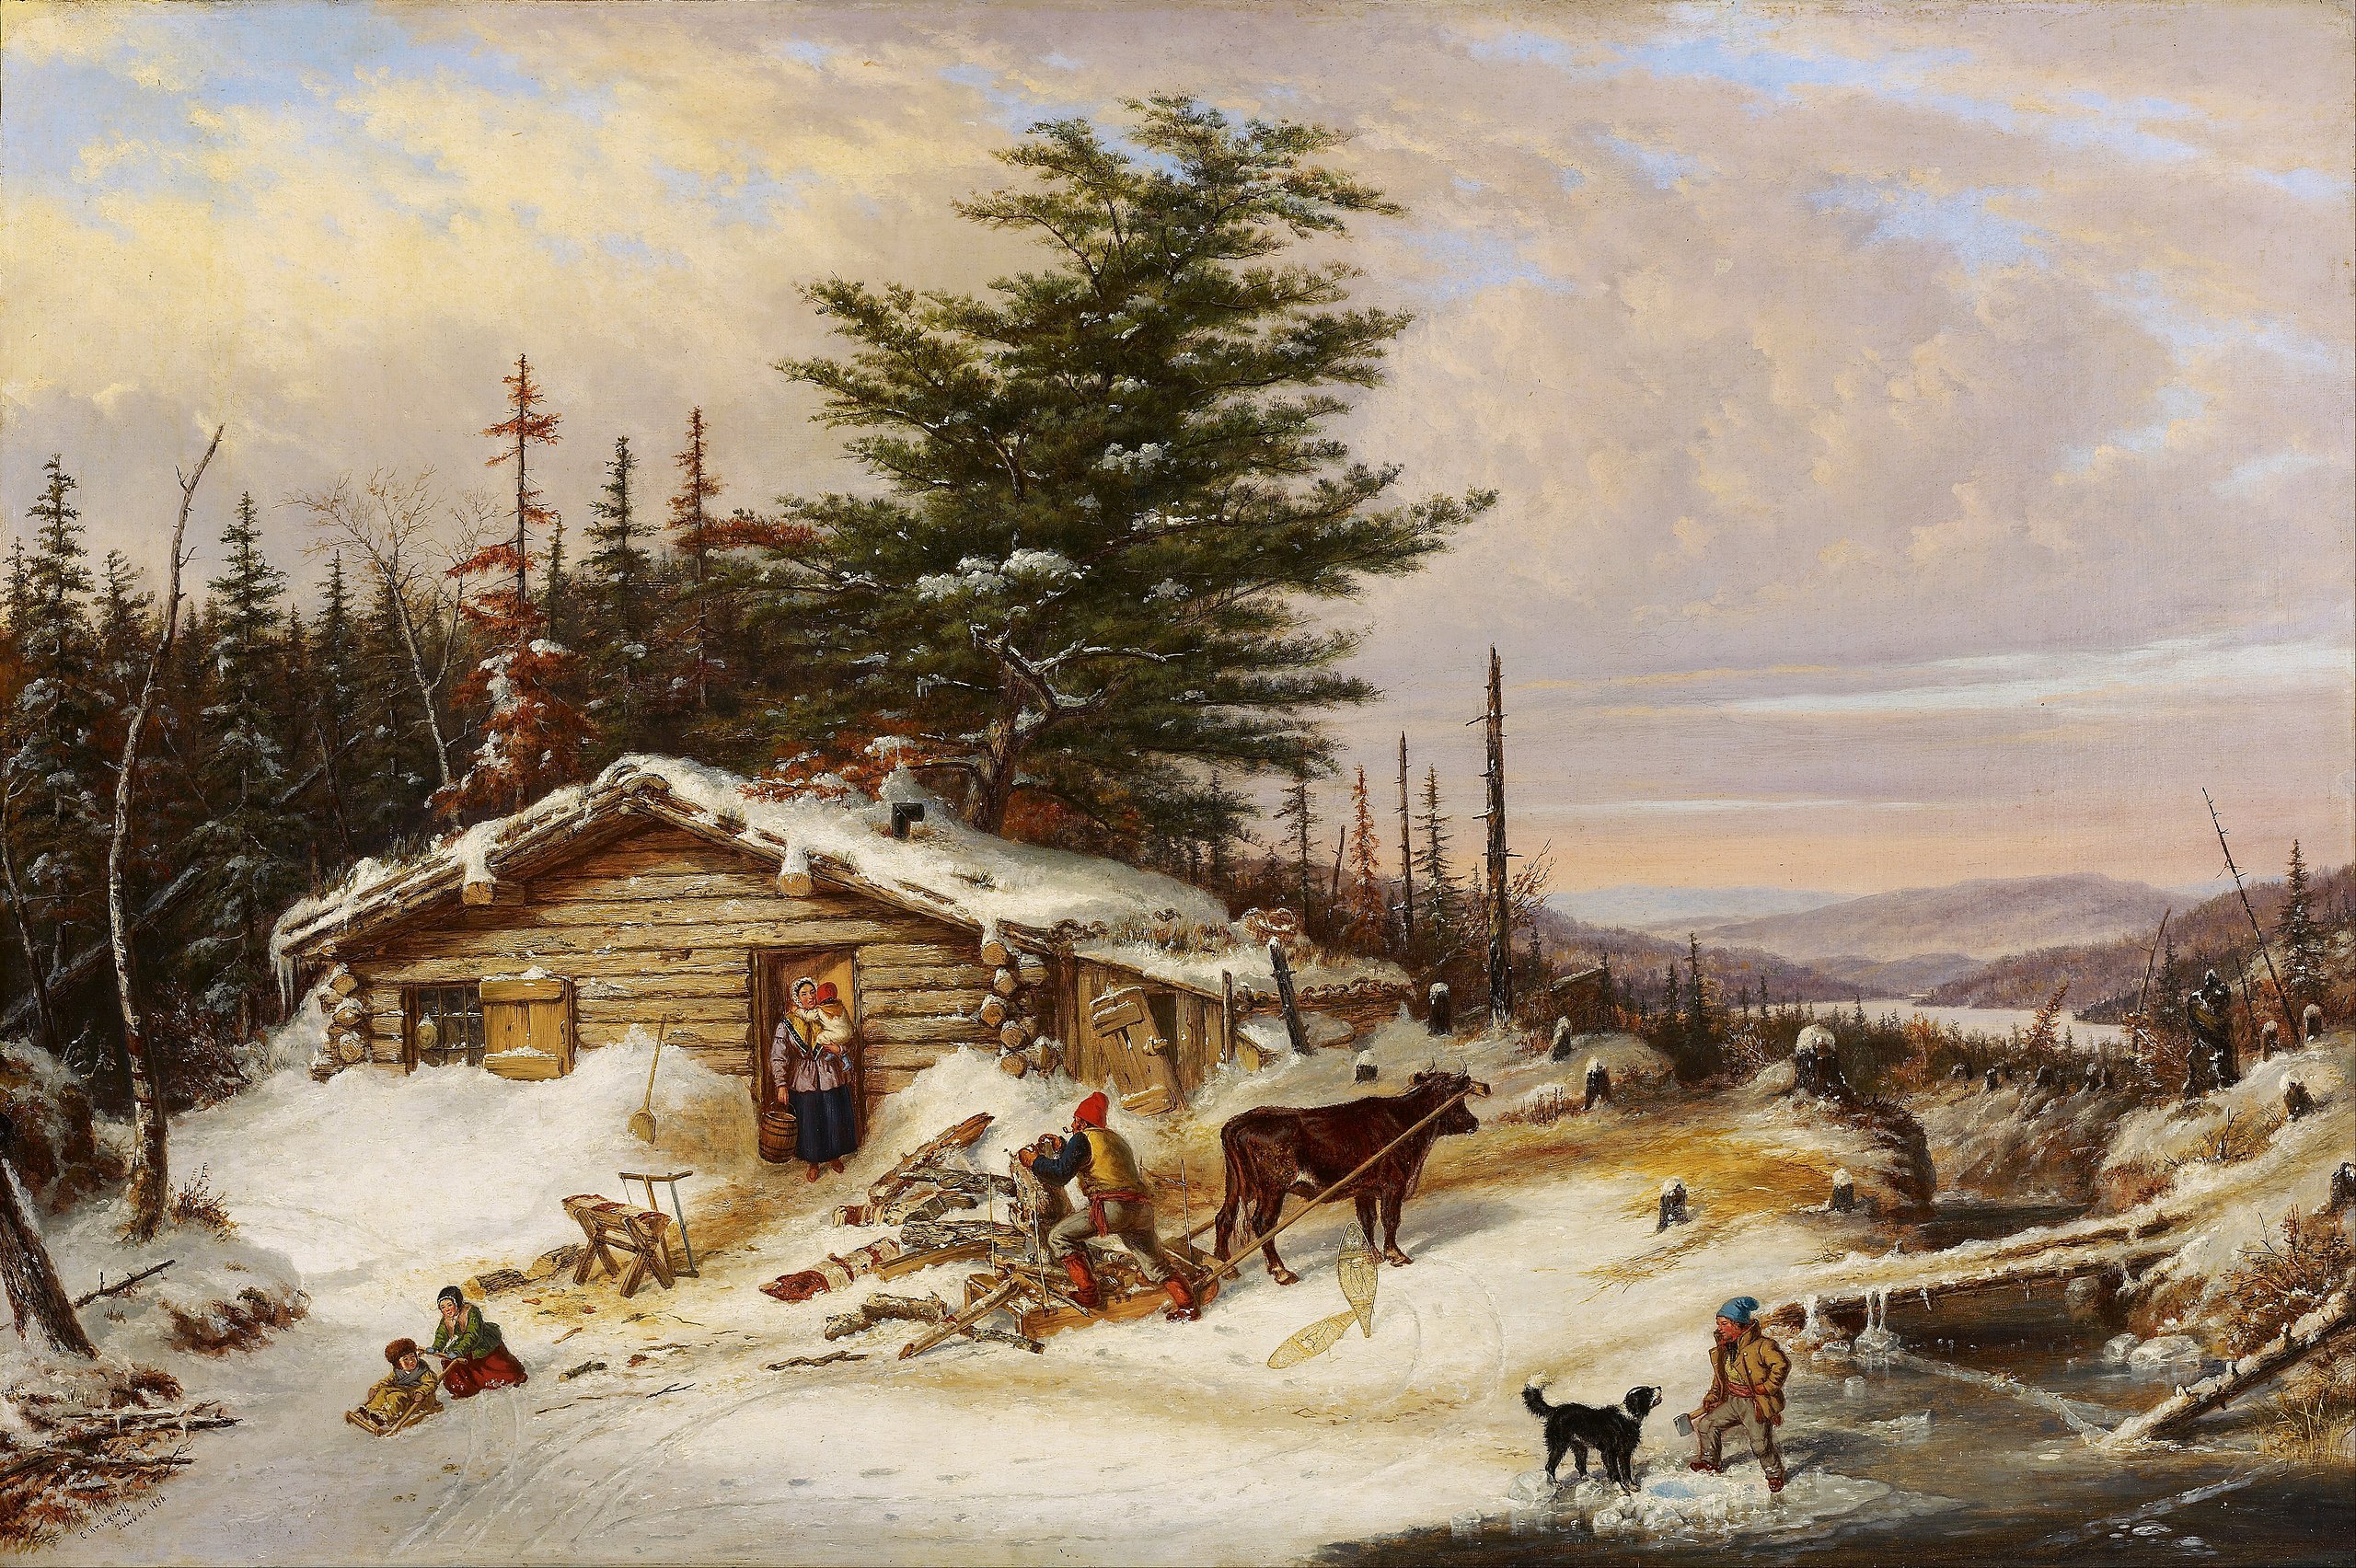 Settler's Log House by Cornelius Krieghoff, 1856 Wiki PD